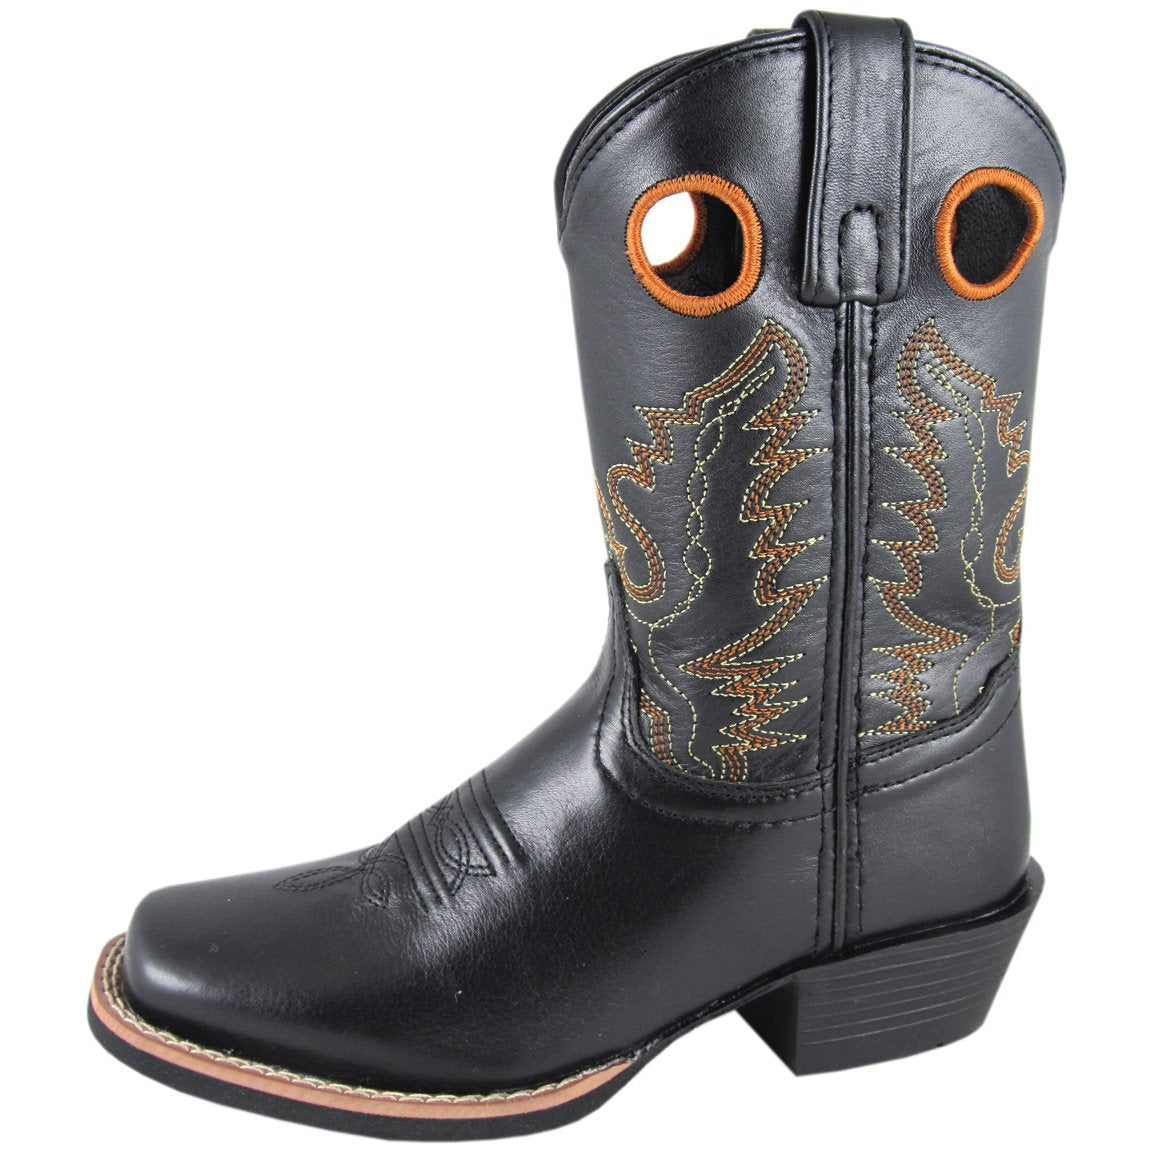 Smoky Mountain Children's Black Square Toe Boot